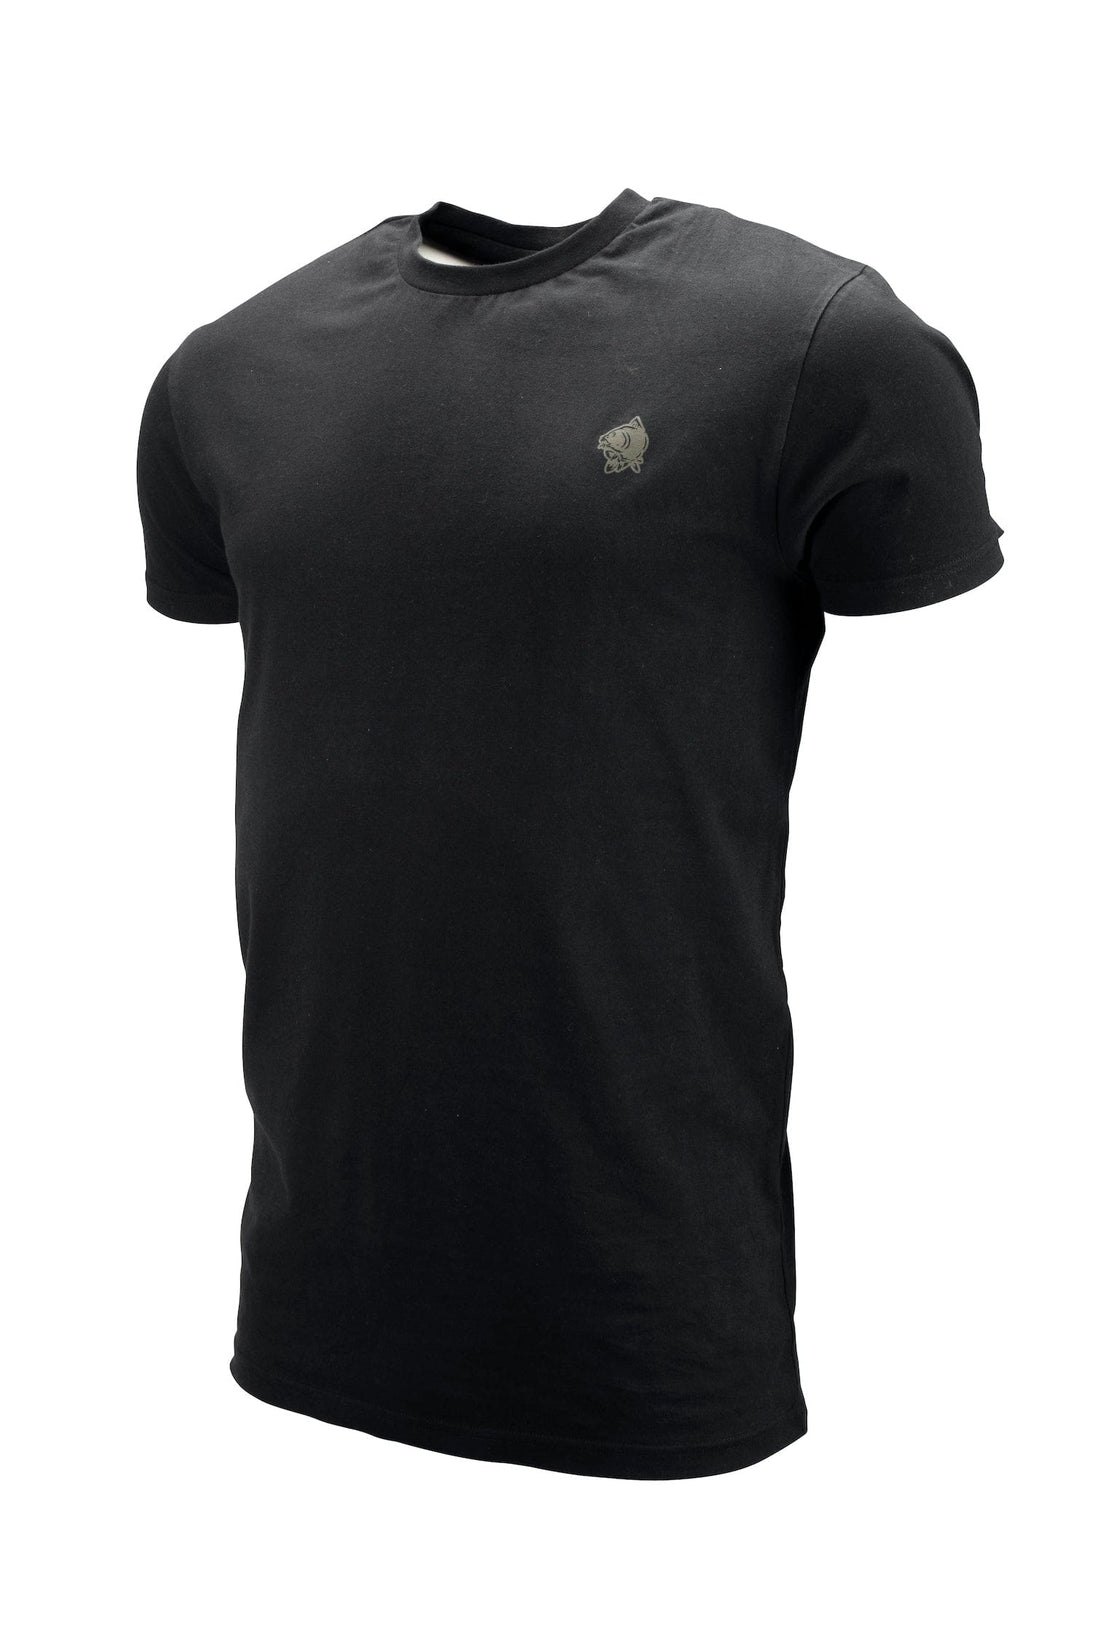 Nash Tackle T-Shirt Black XXXLarge